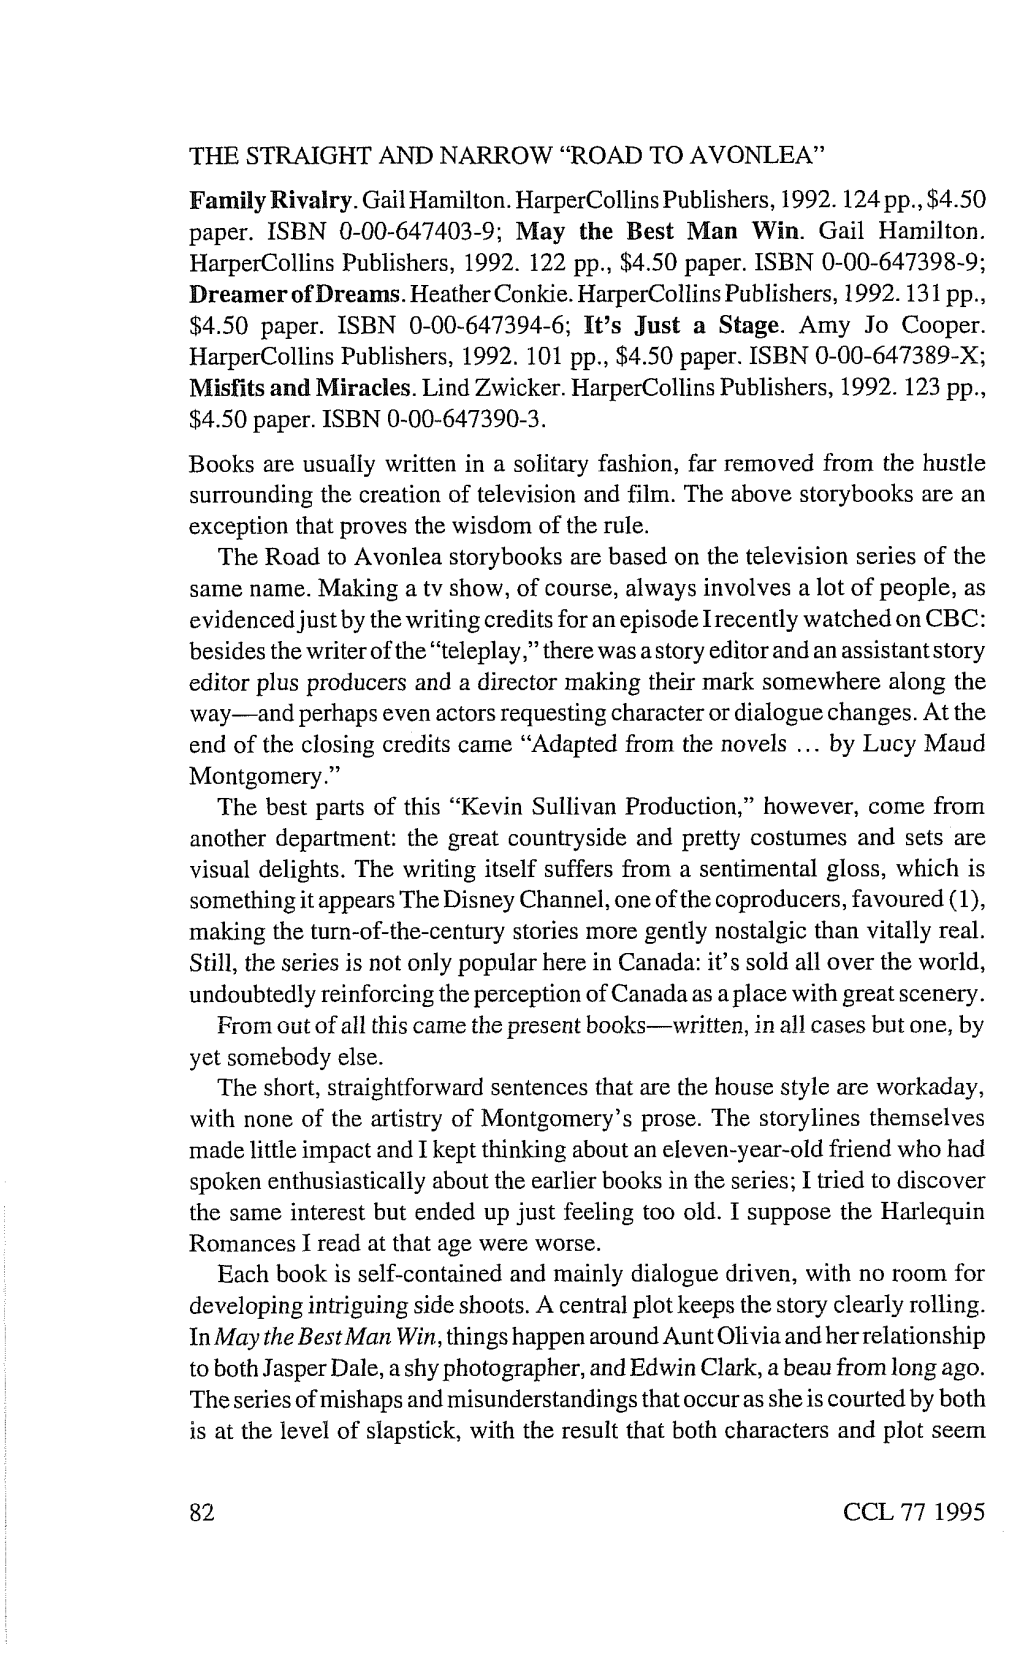 "ROAD to AVONLEA" Family Rivalry. Gailharnilton. Harpercollinspublishers, 1992.124Pp., $4.50 Paper